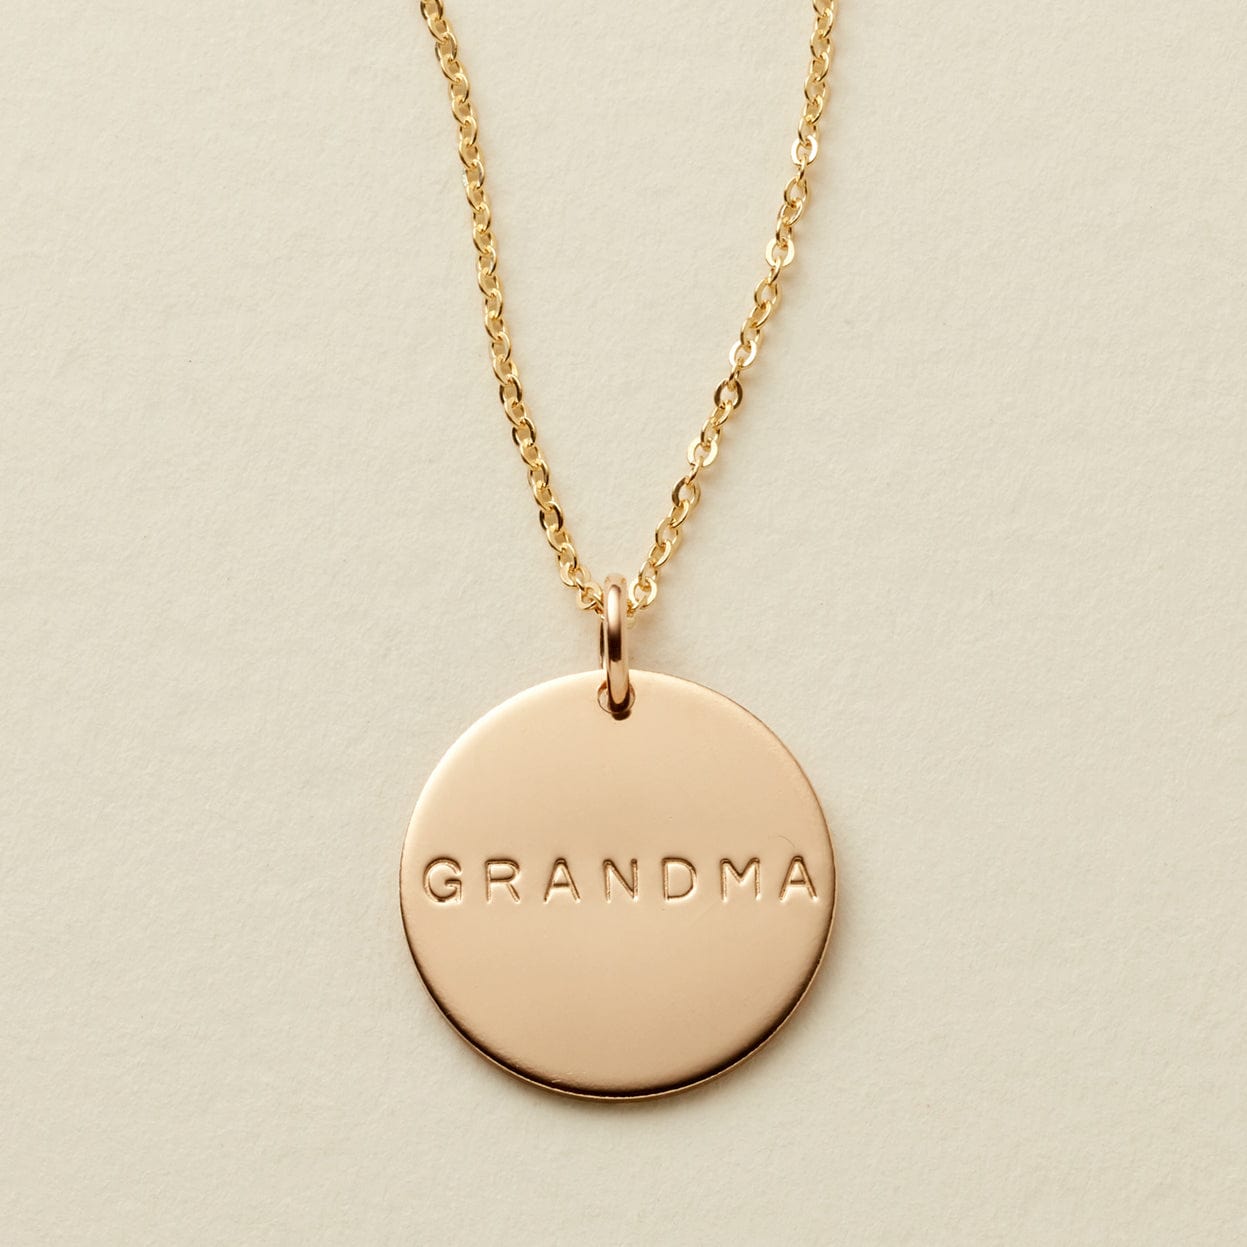 Grandma Disc Necklace - 5/8" Necklace